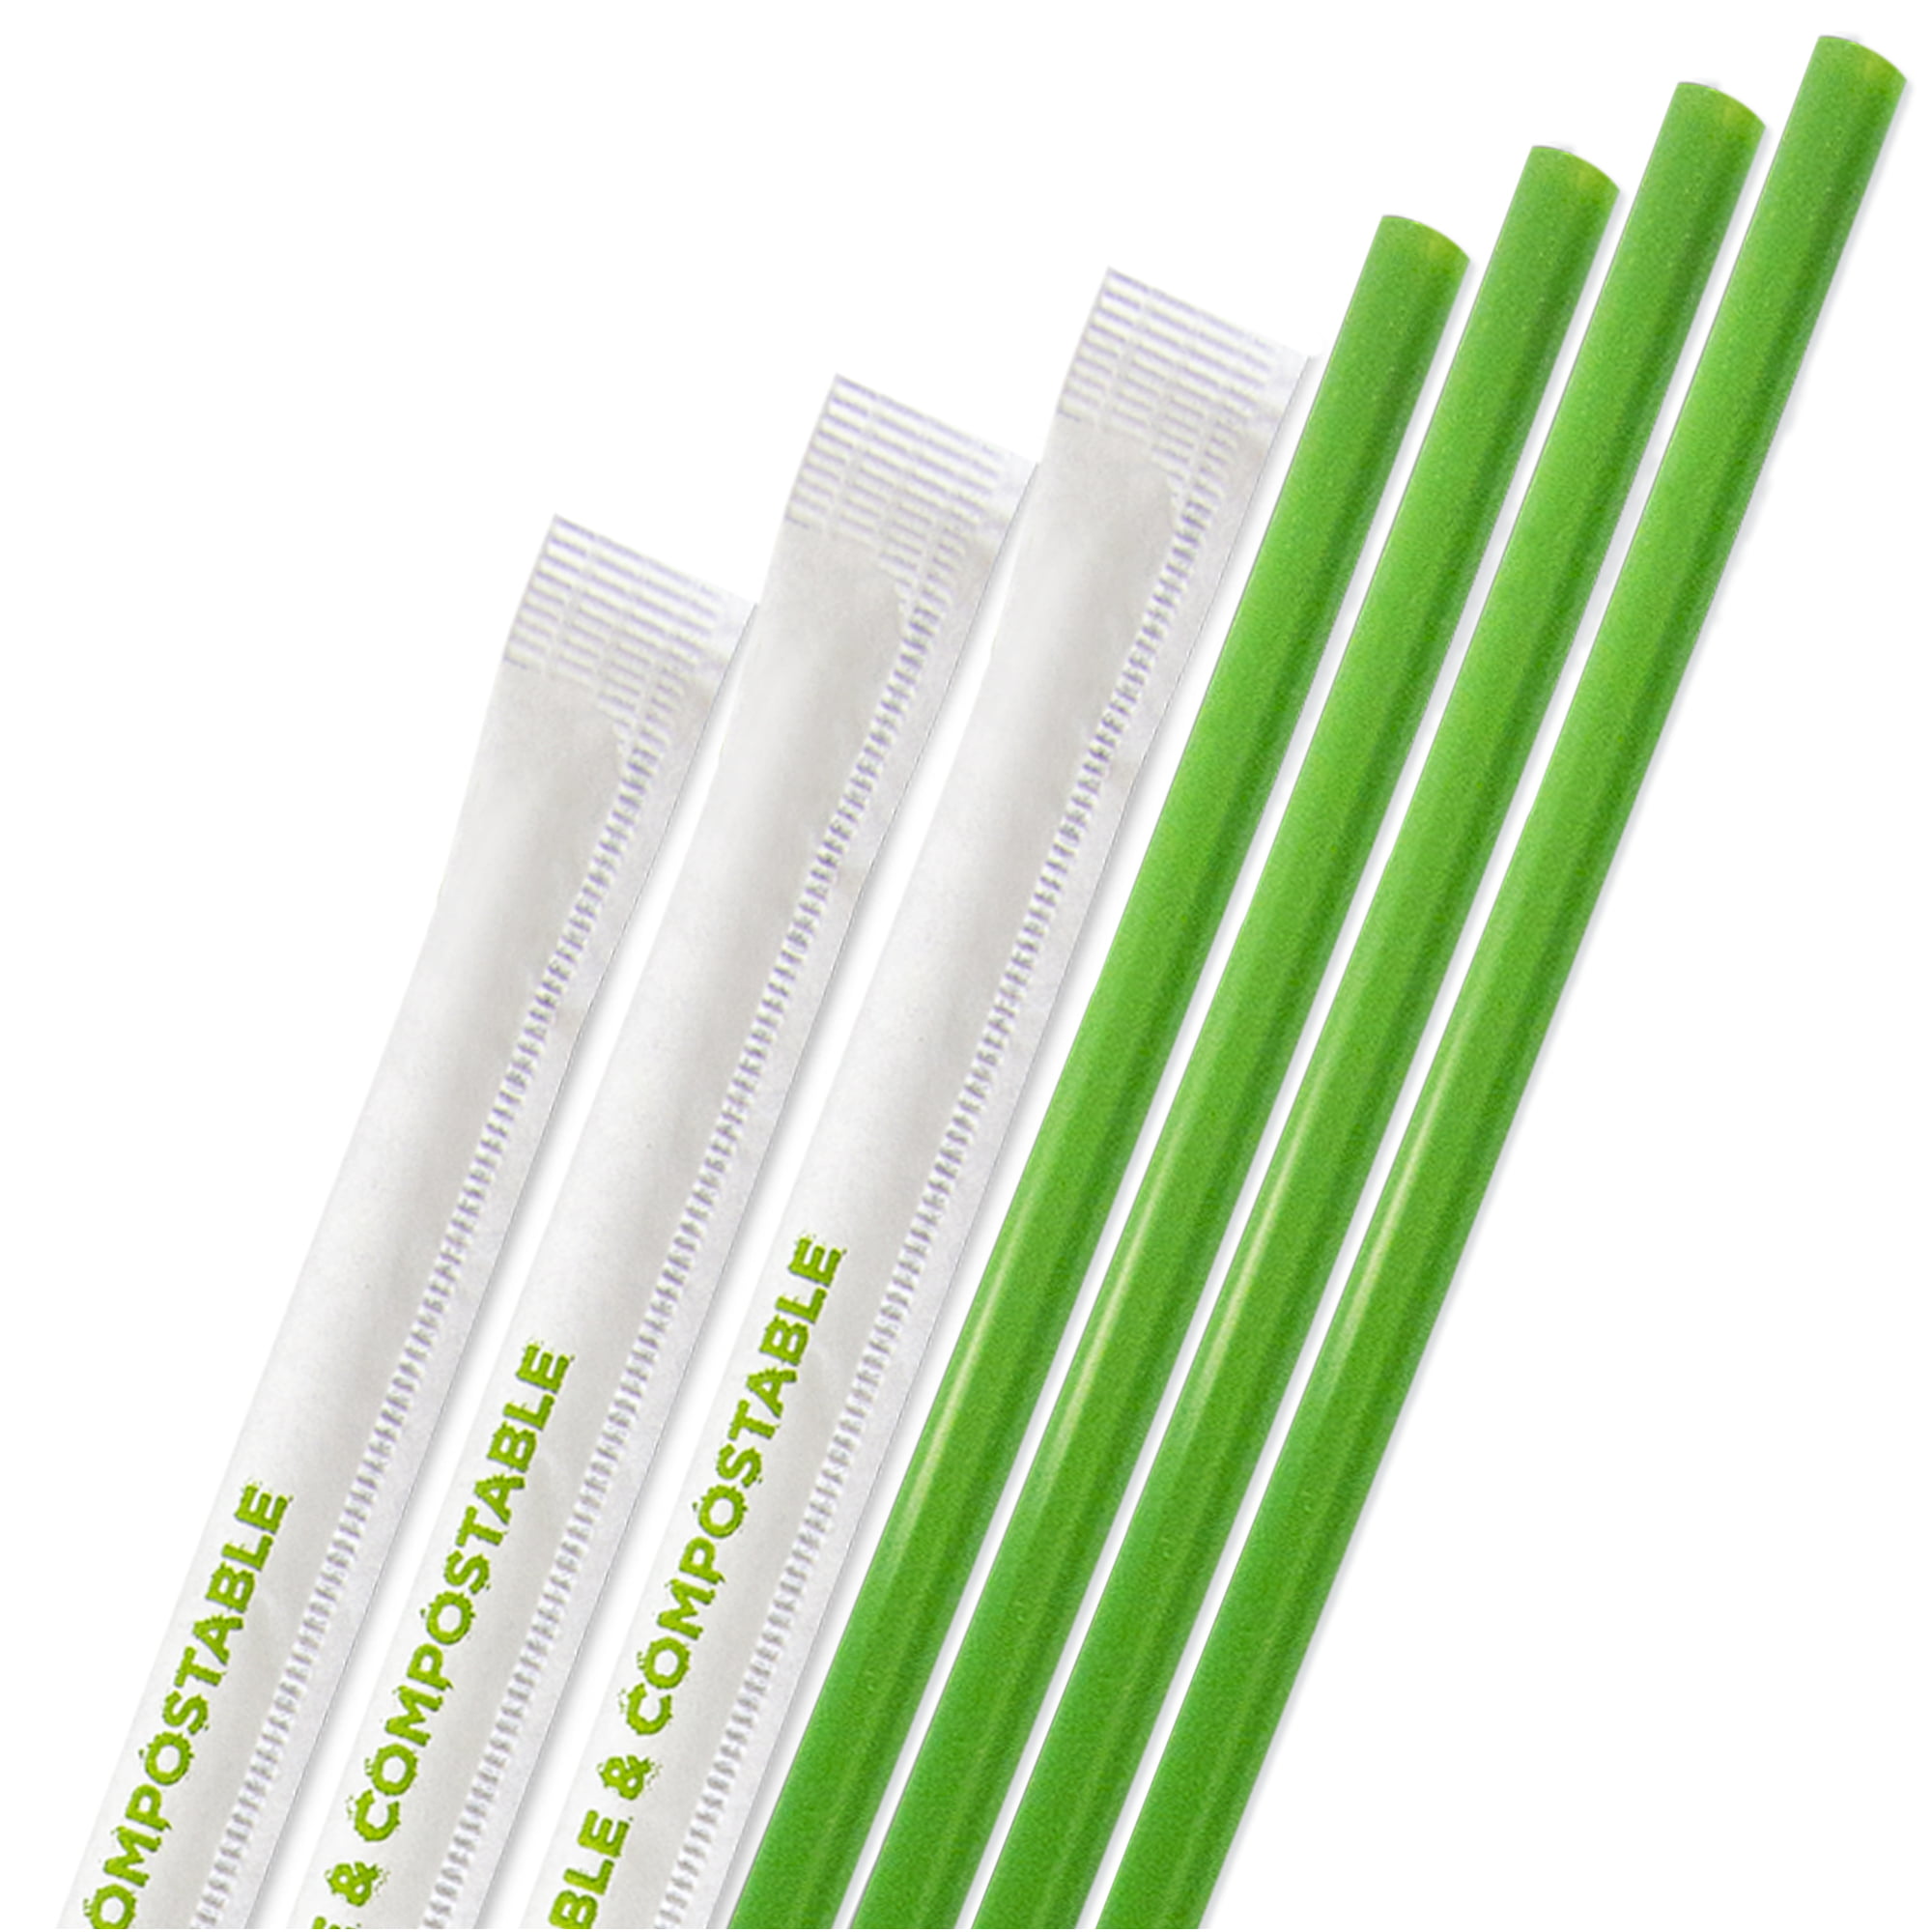 Basic Nature Green PLA Plastic / PBAT Plastic Boba Straw - Compostable - 9  - 2000 count box